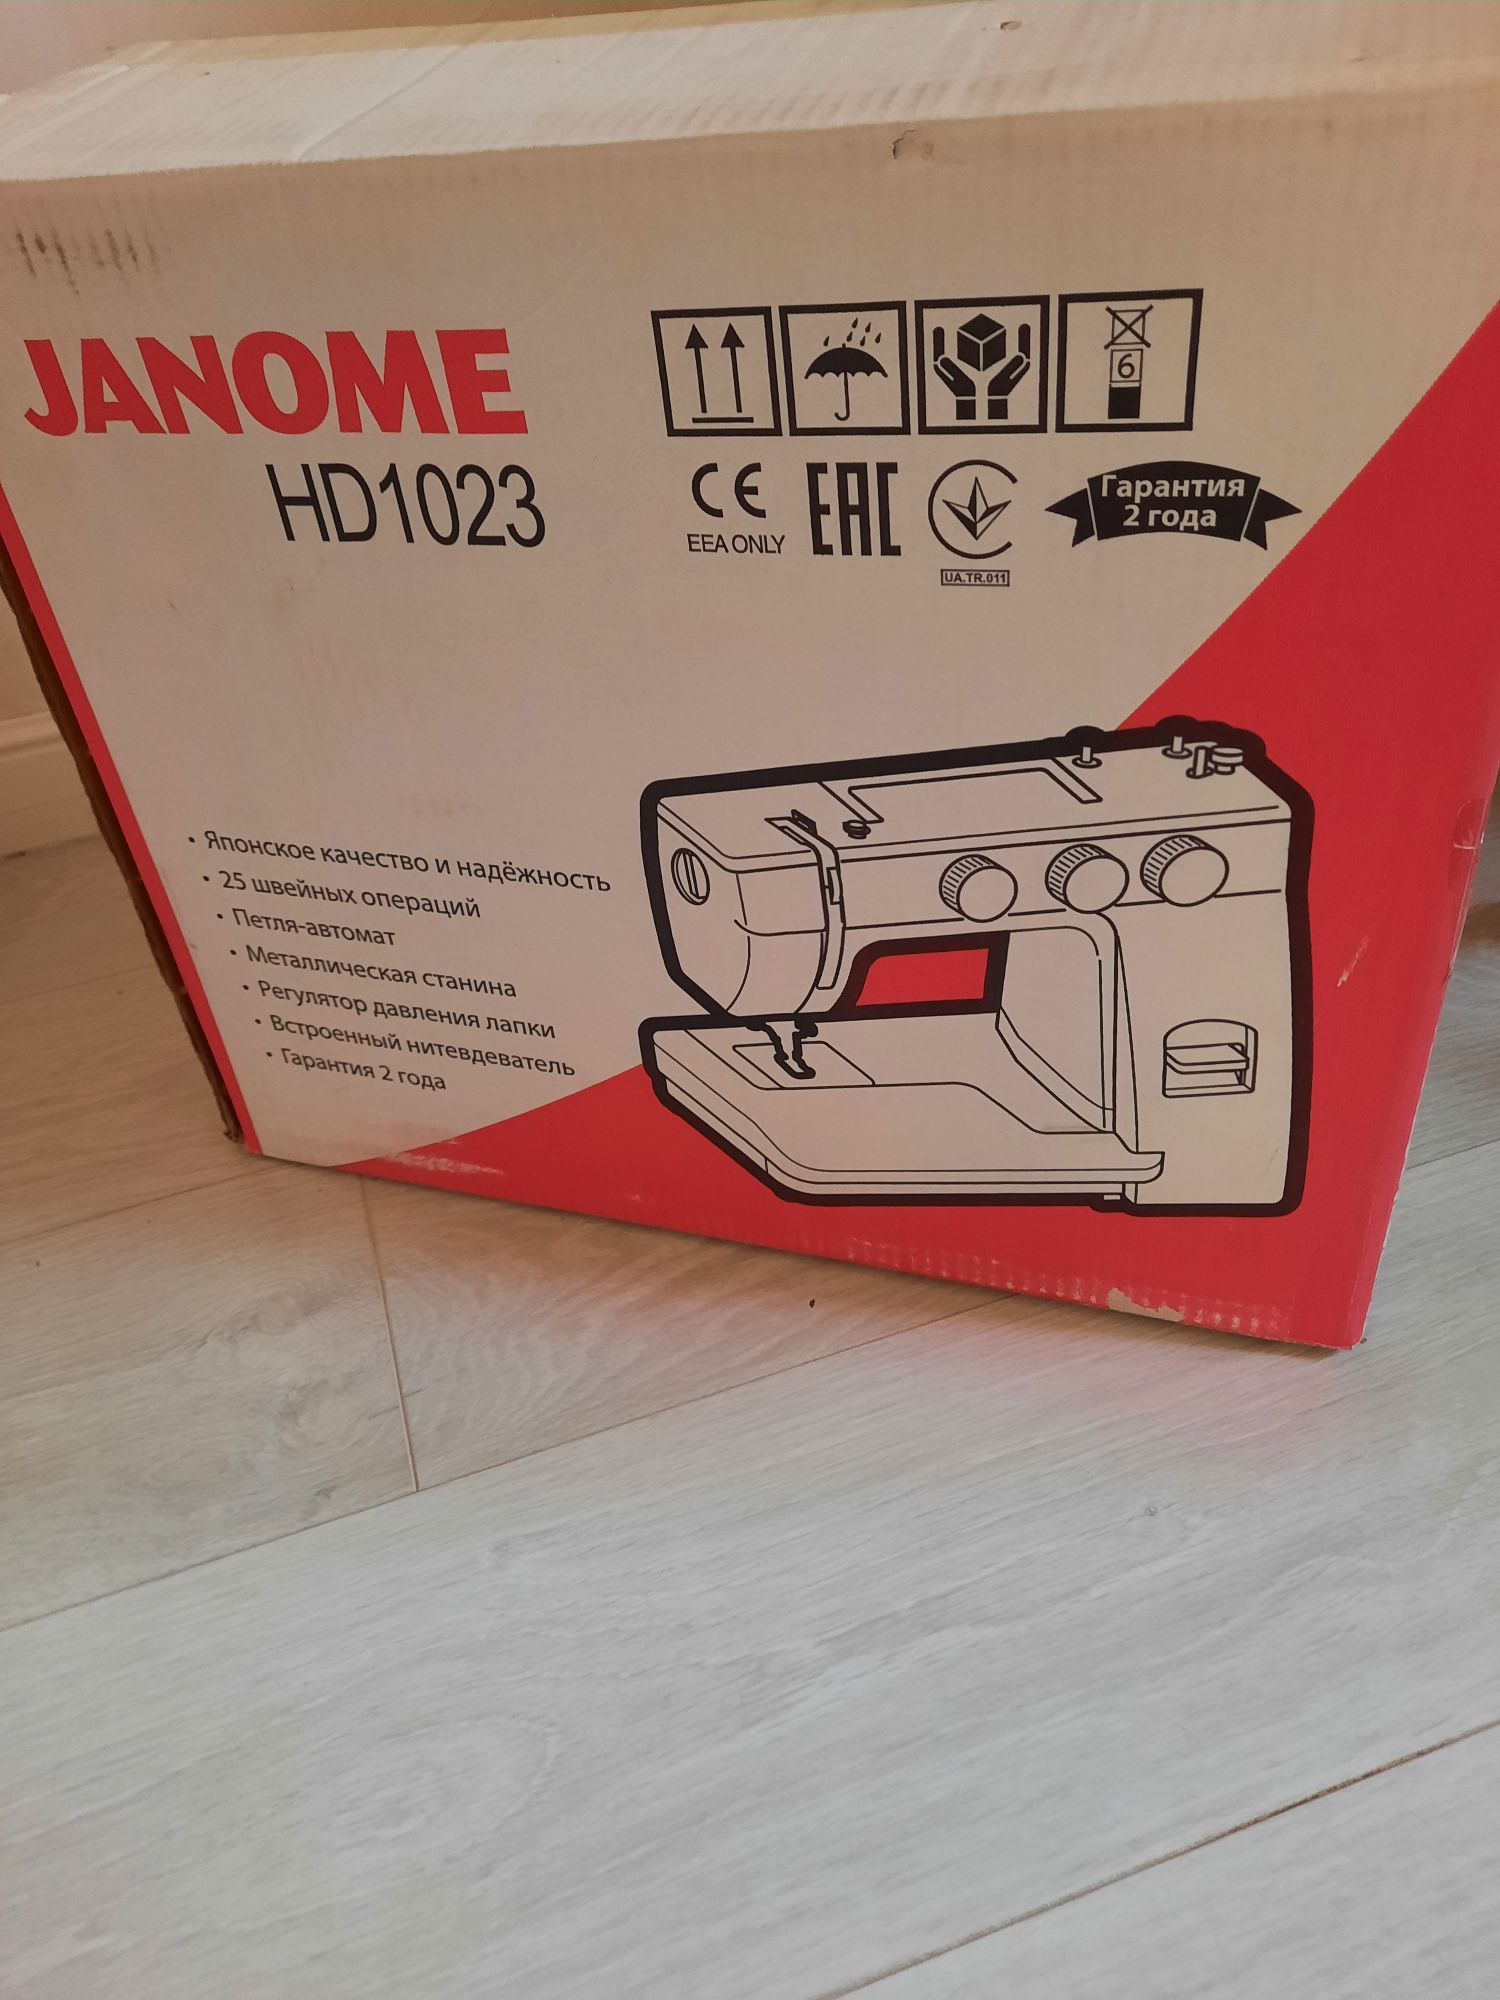 Продам новую швейную машину JANOME